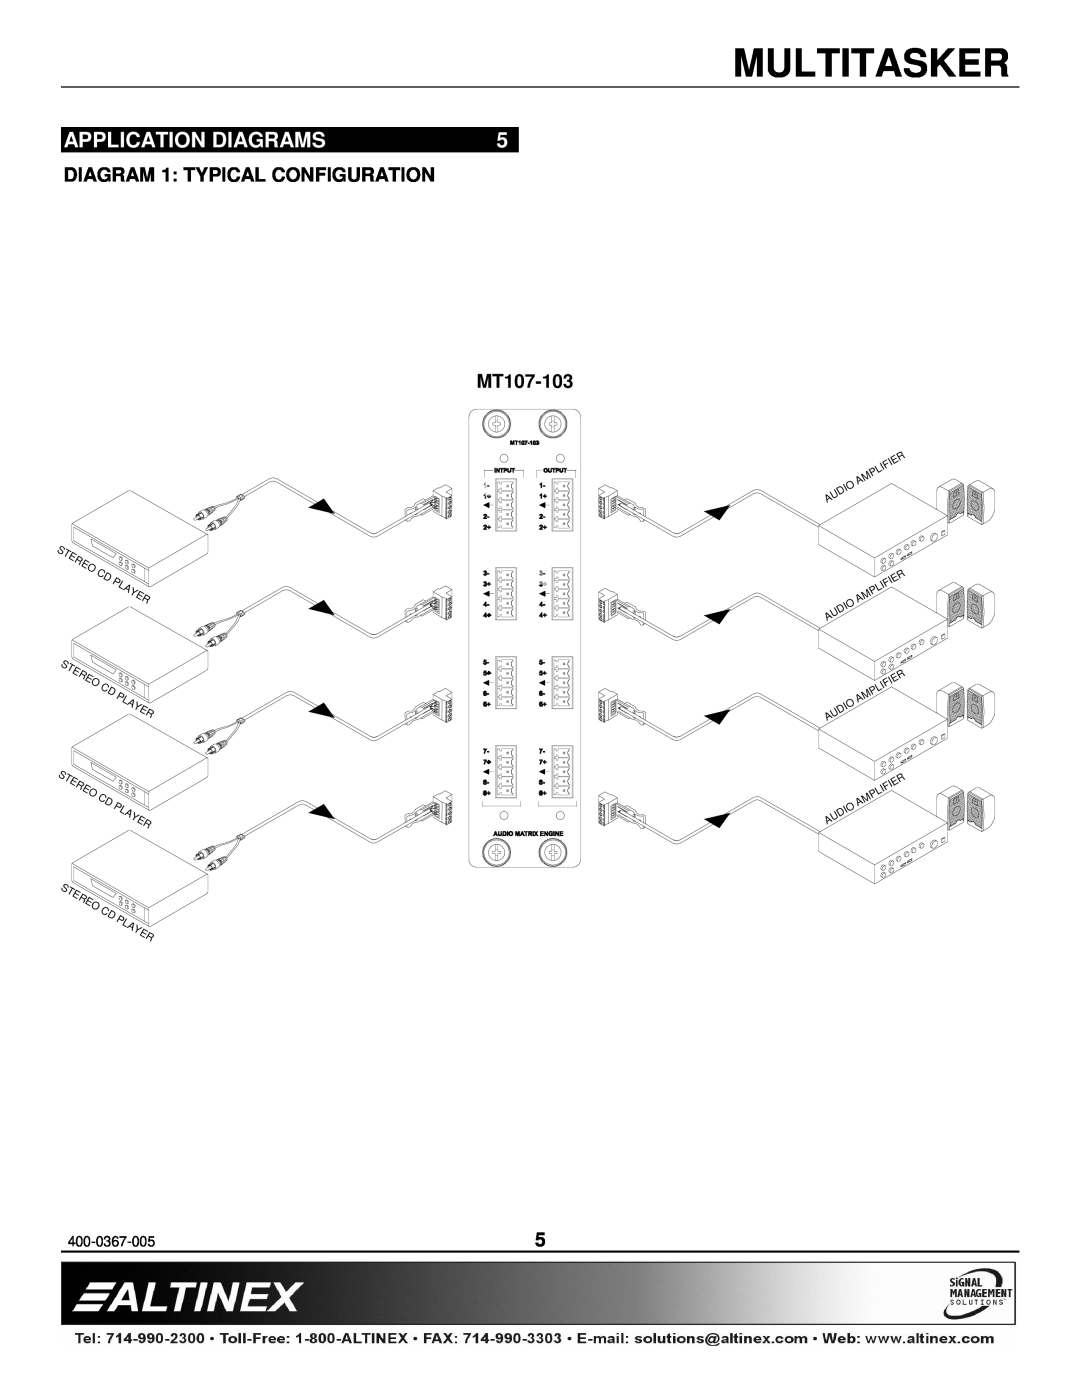 Altinex MT107-103 manual Application Diagrams, DIAGRAM 1 TYPICAL CONFIGURATION, Multitasker, Player 